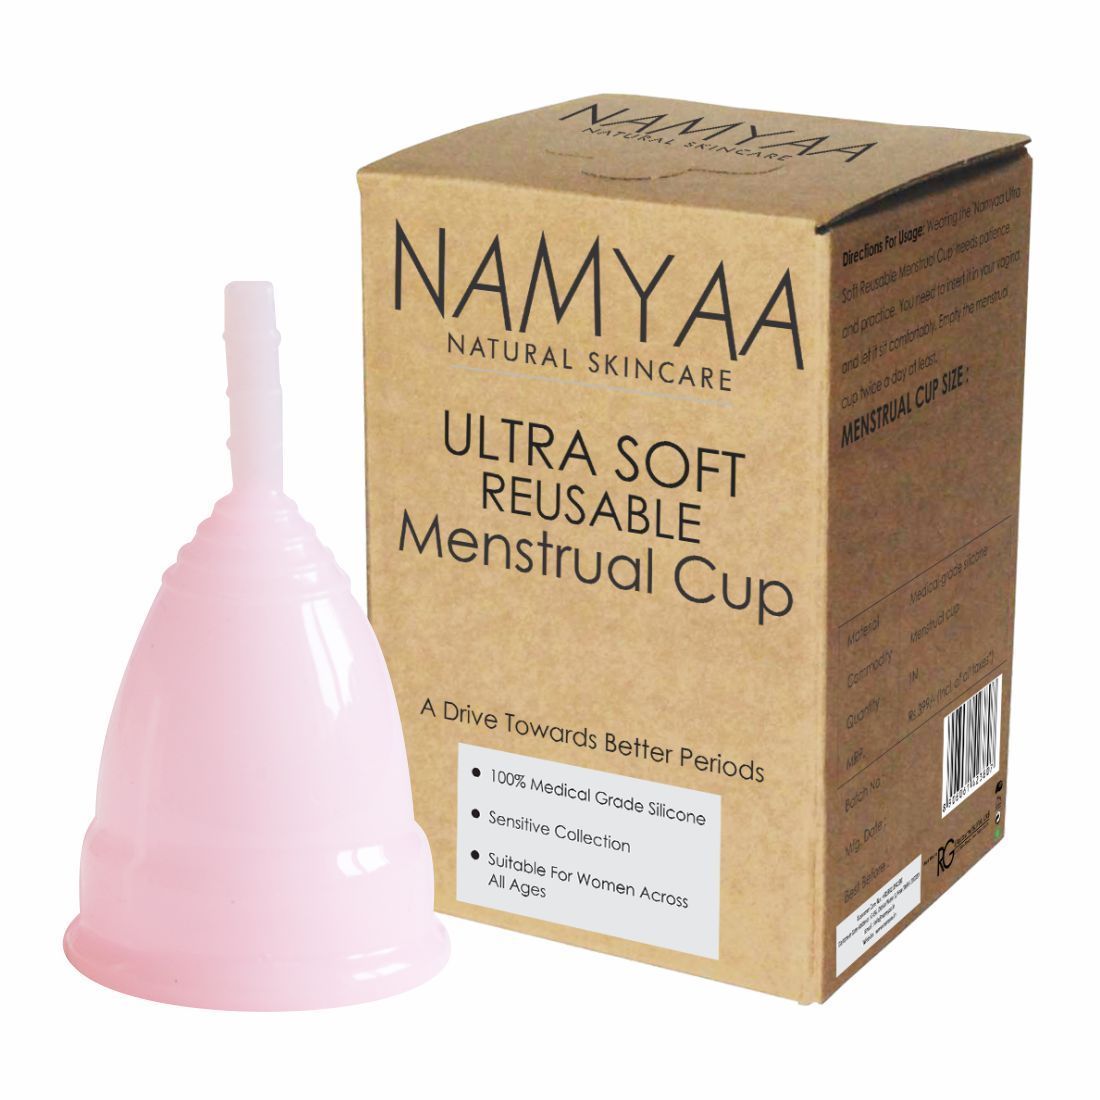 Namyaa Ultra Soft Reusable Menstrual Cup Medium, 1 Count, Pack of 1 